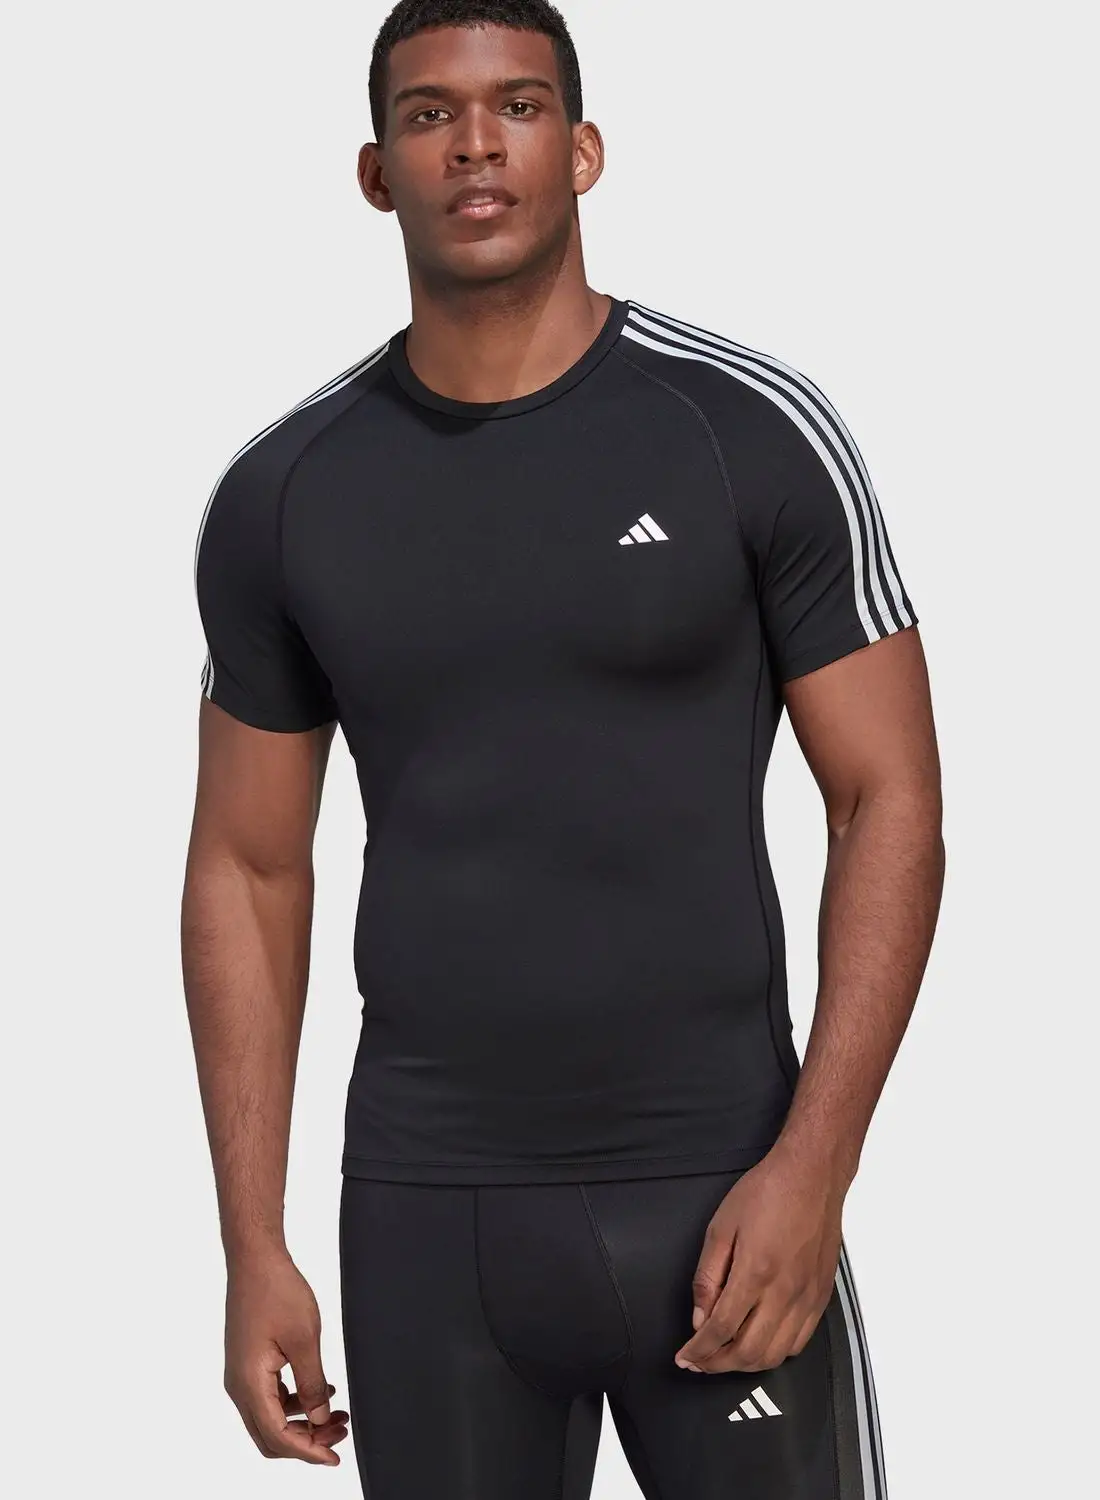 Adidas 3 Stripes Techfit T-shirt